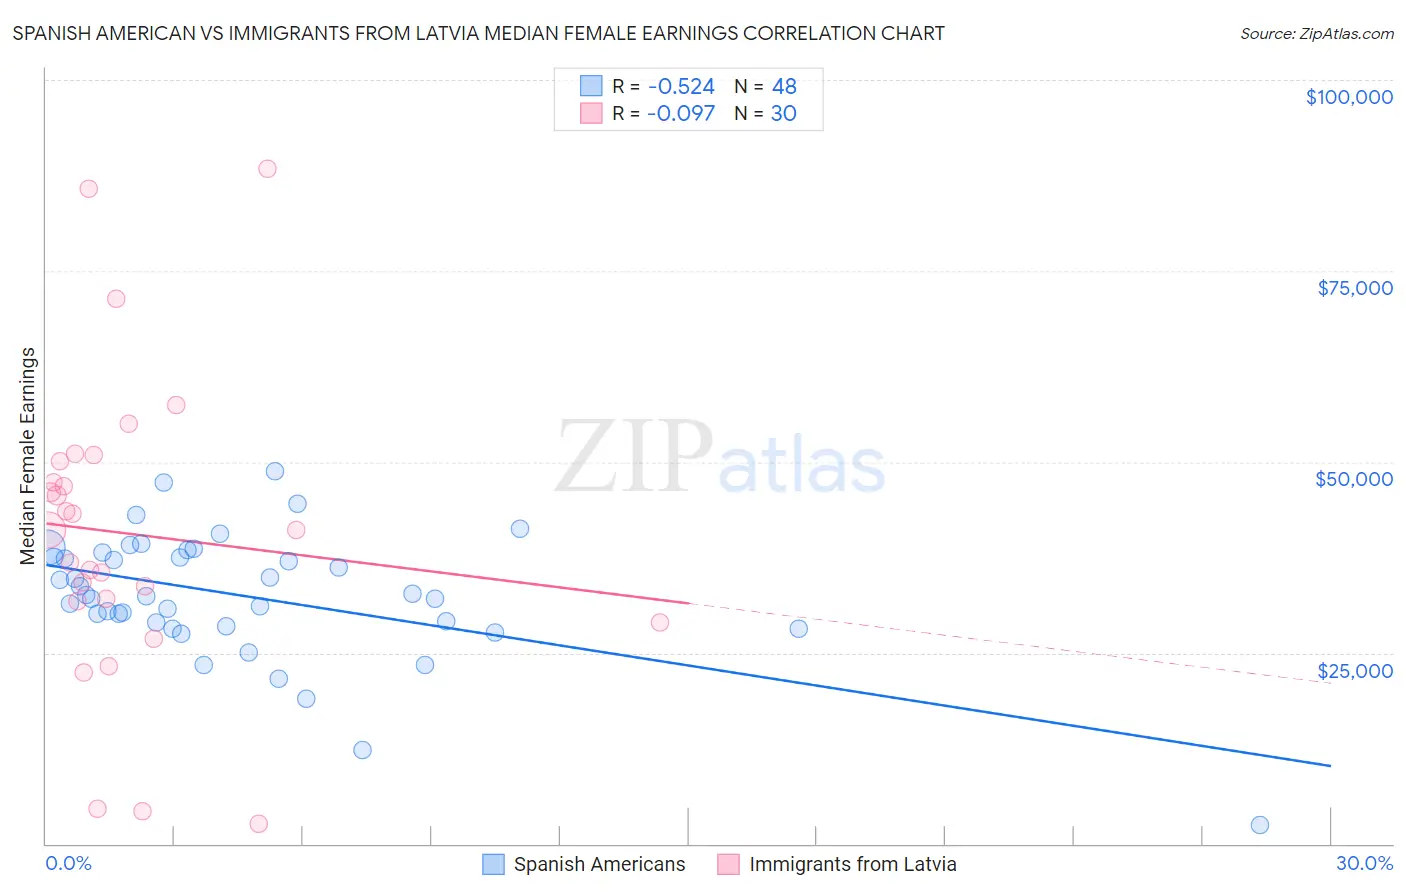 Spanish American vs Immigrants from Latvia Median Female Earnings